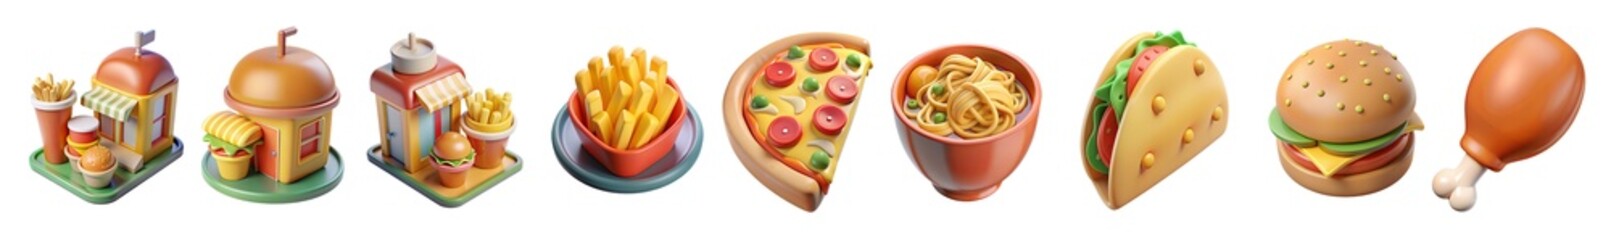 Fast food 3d realistic render vector icon set. Pizza, taco, hamburger, fries potatoes, ramen noodle soup, hot dog, popcorn, chicken leg